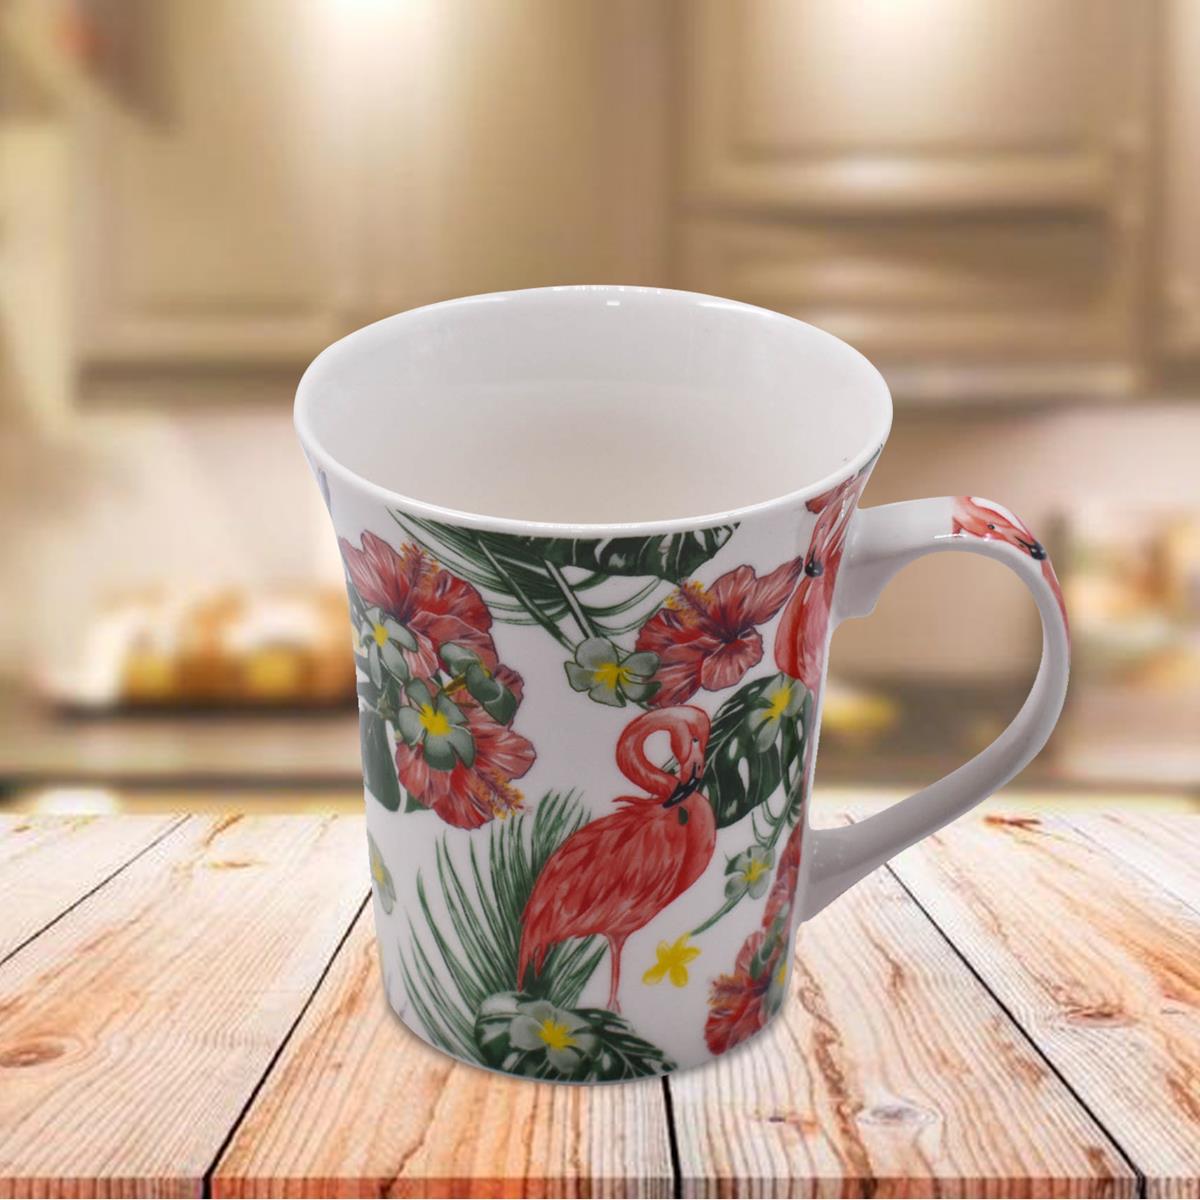 Printed Ceramic Tall Coffee or Tea Mug with handle - 325ml (BPM4051-B)